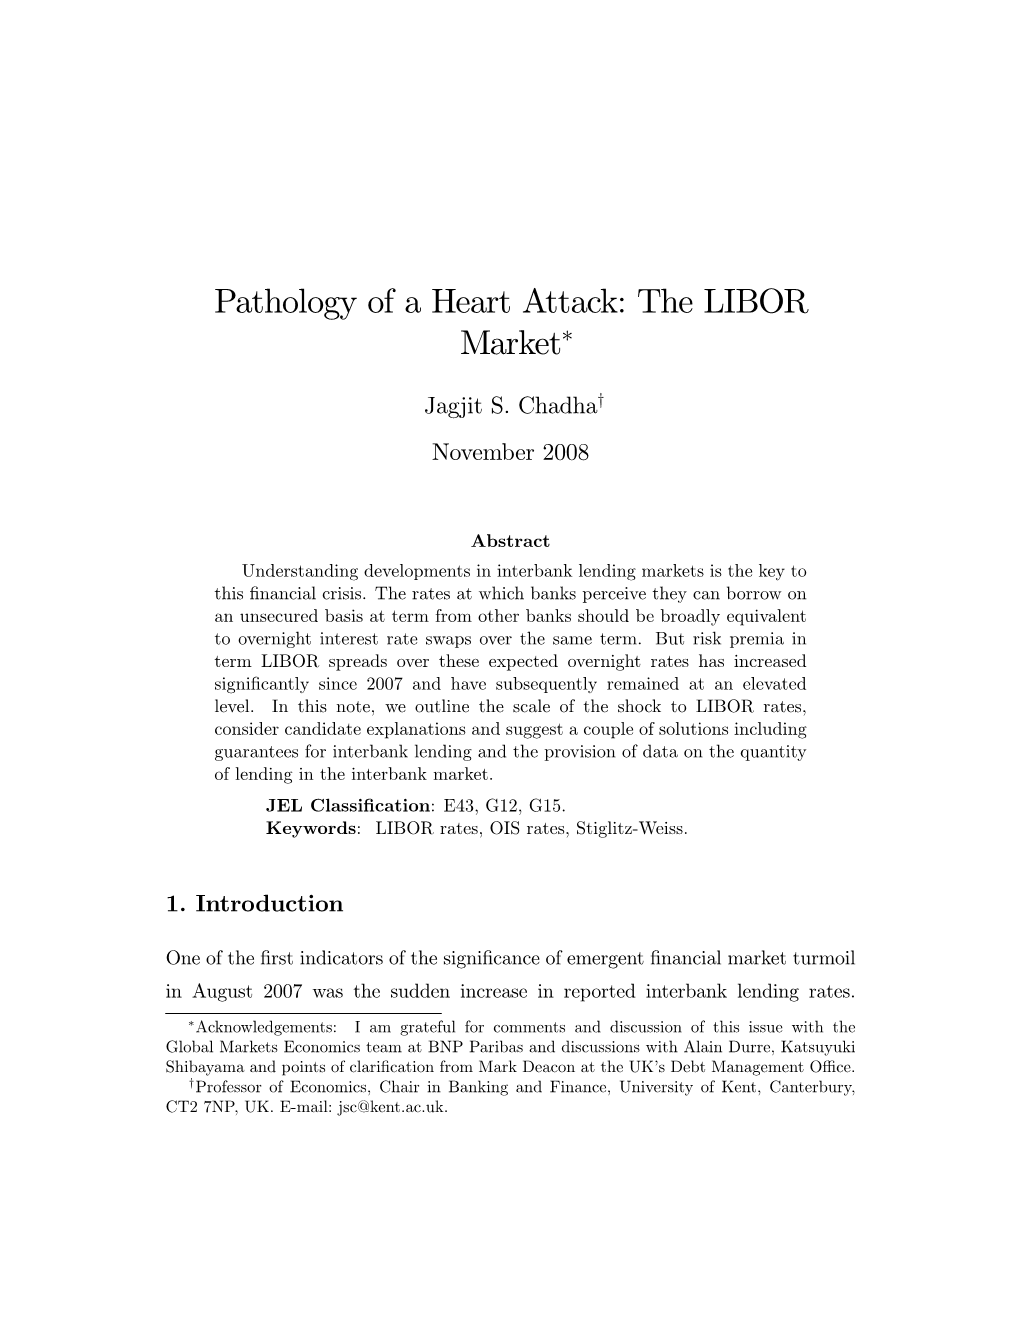 The LIBOR Market